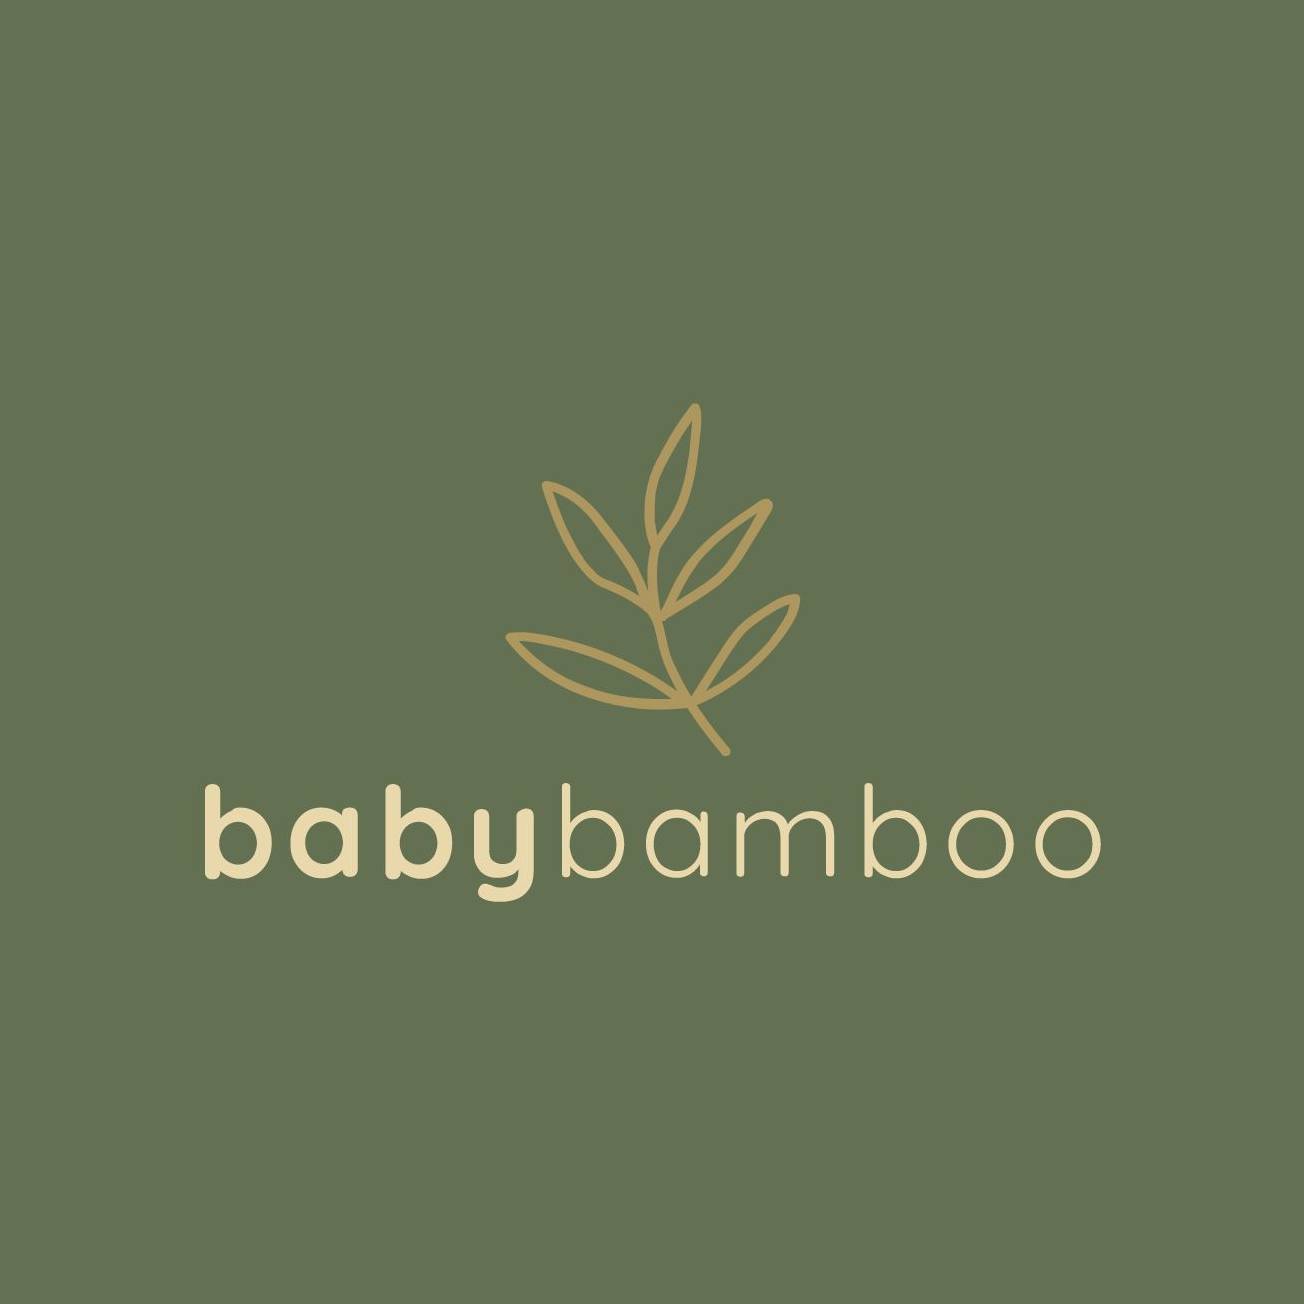 Baby Bamboo's logo